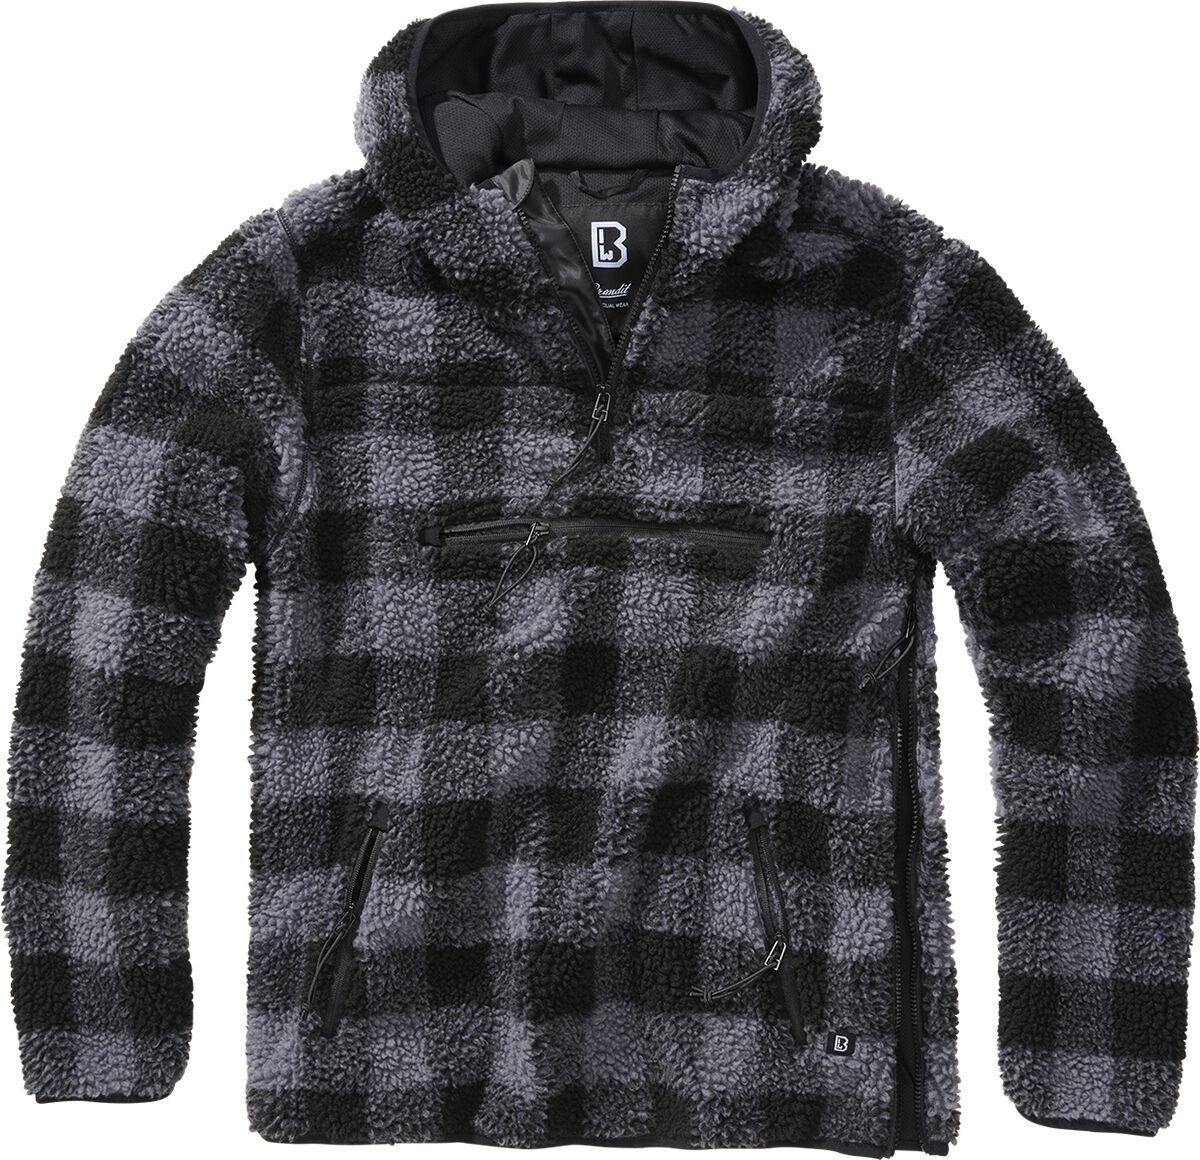 Brandit Teddyfleece Worker Pullover Kapuzenpullover schwarz grau in L